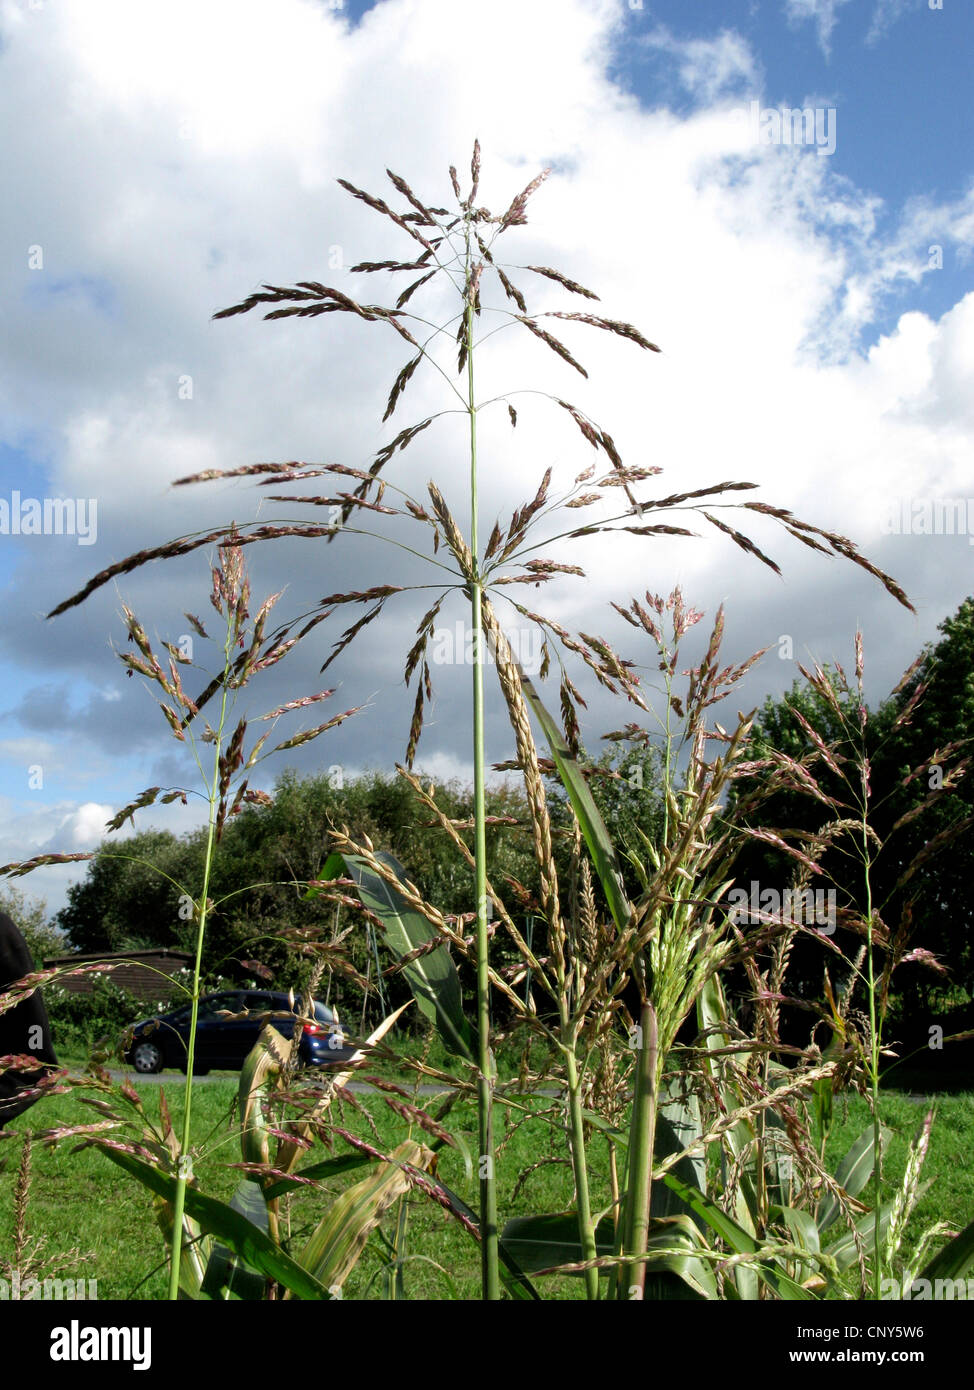 Johnson grass, Sorghum, Johnsongrass (Sorghum halepense), inflorescence, Germany Stock Photo